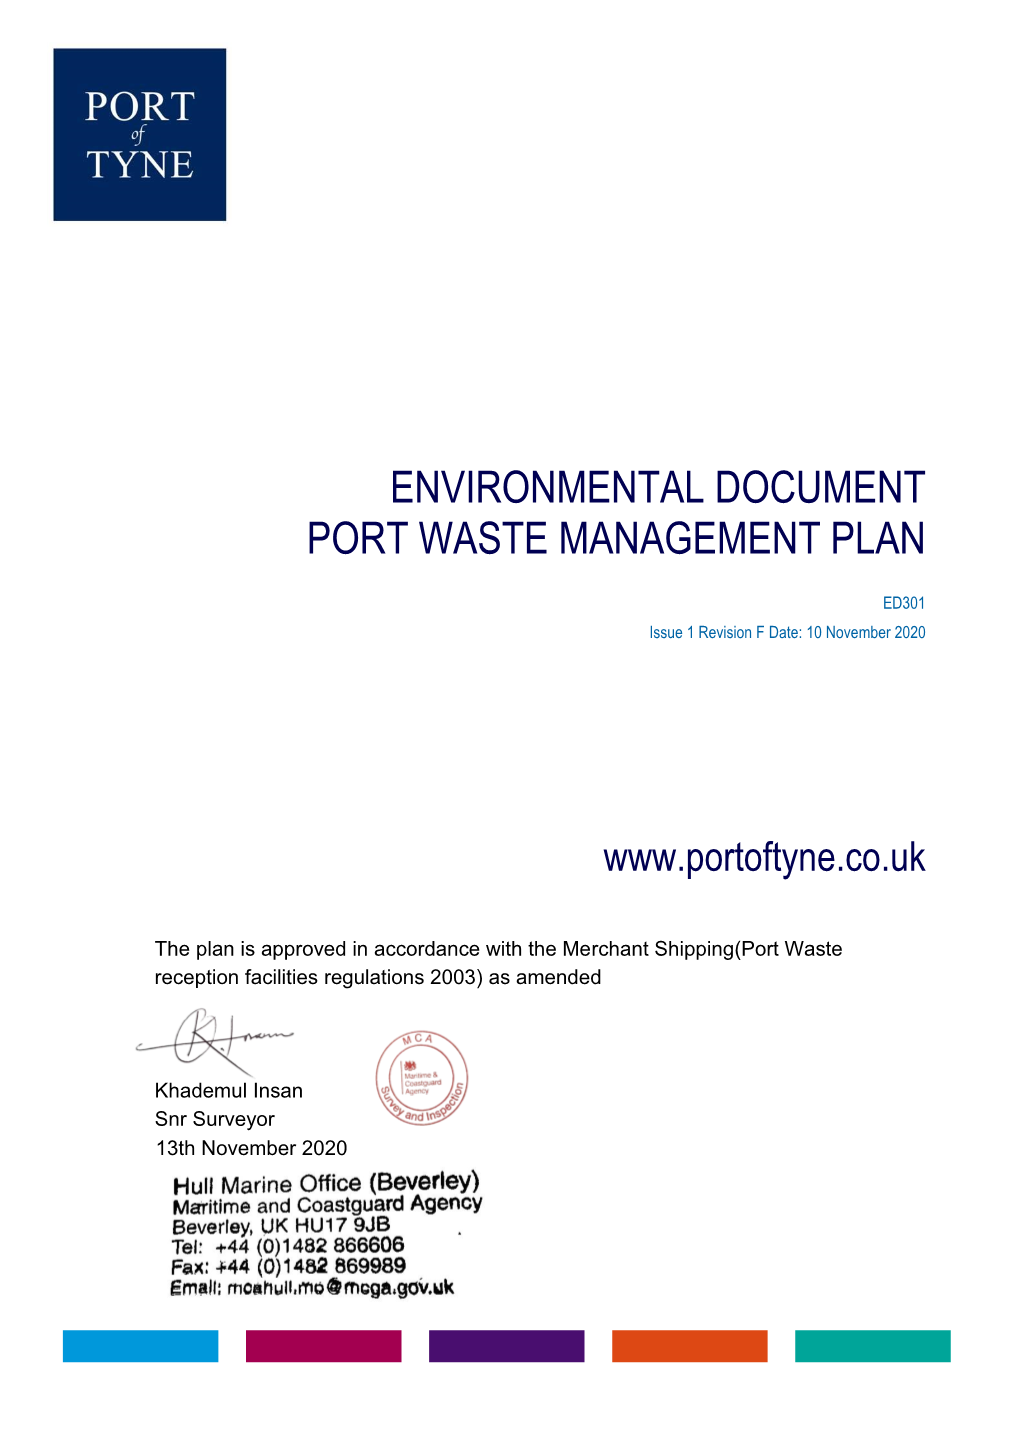 Environmental Document Port Waste Management Plan